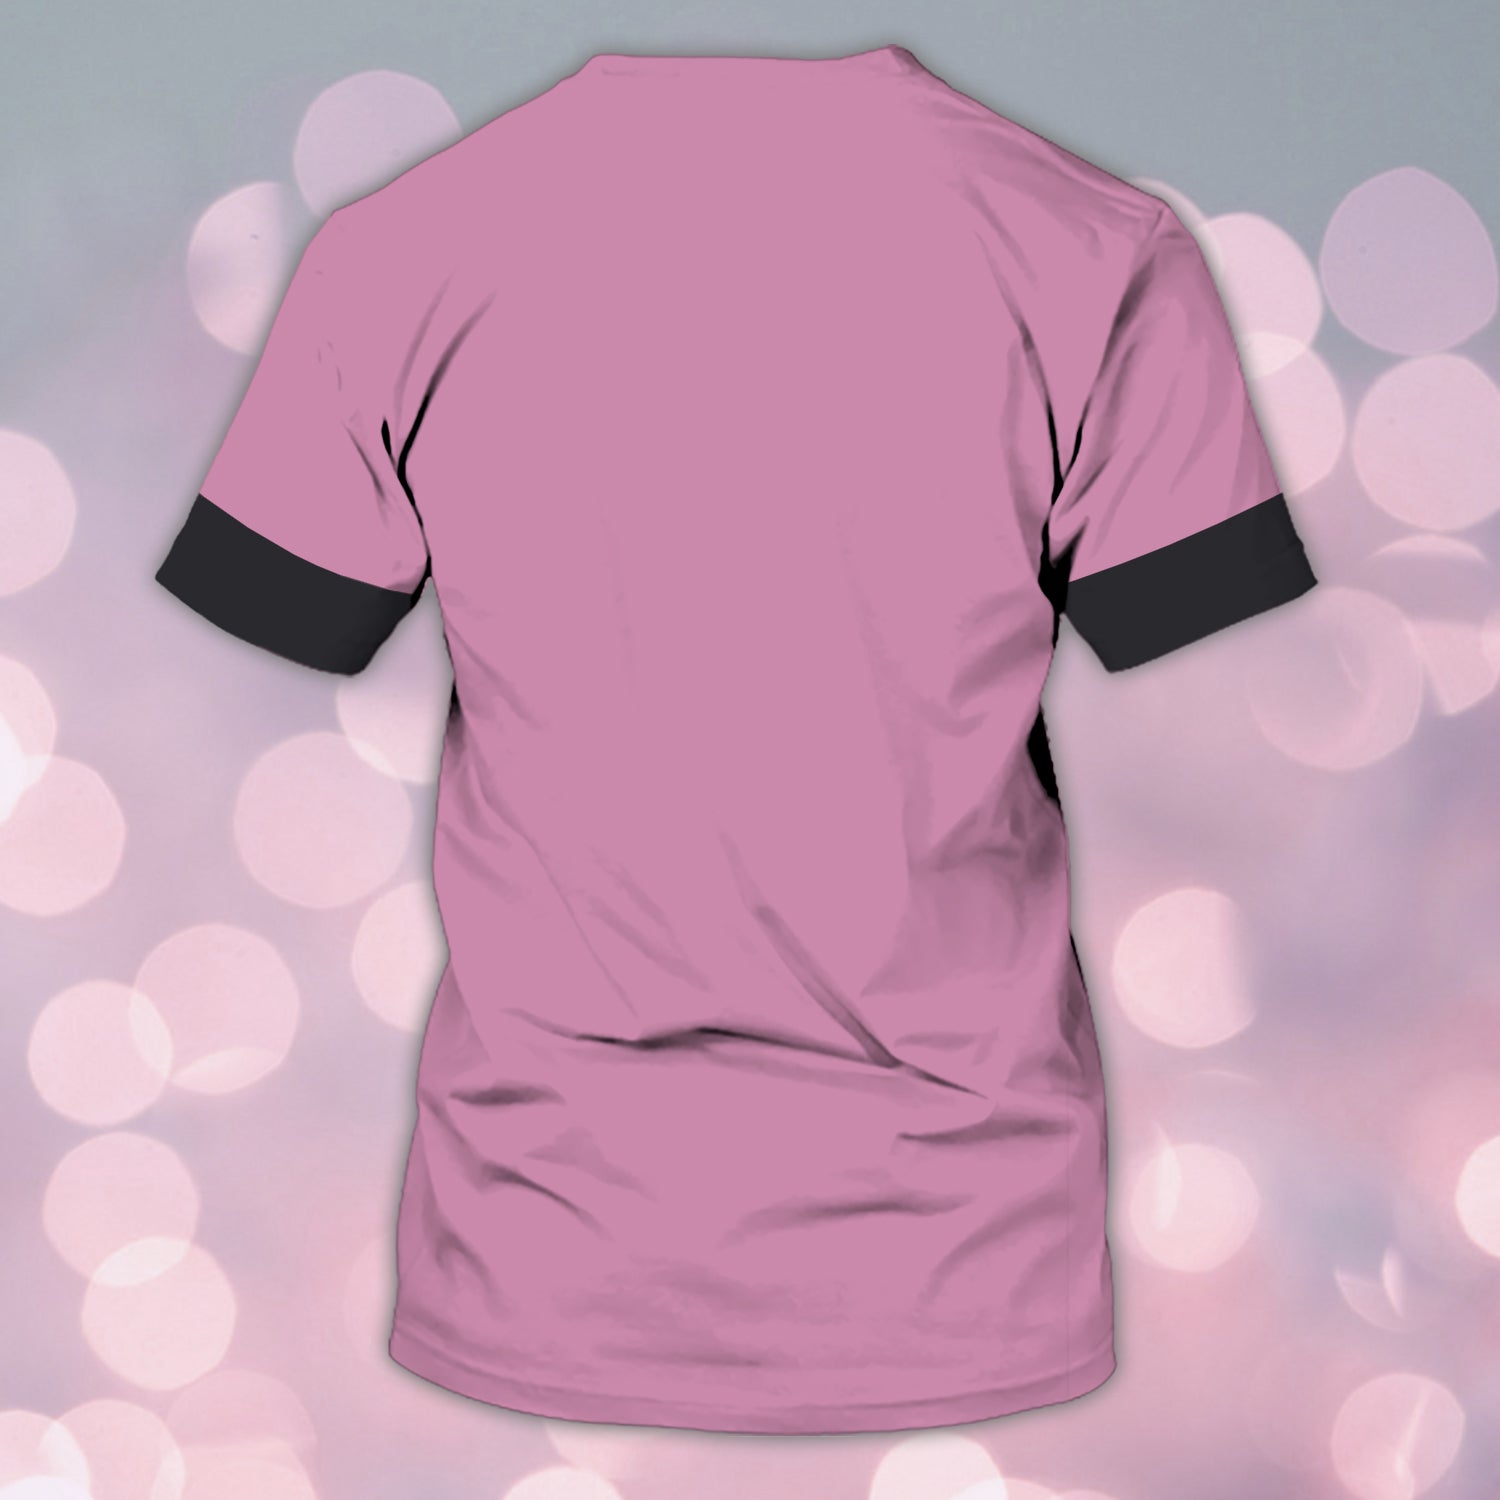 Custom 3D T Shirt Body Contouring Specialist Pink Shirts Women